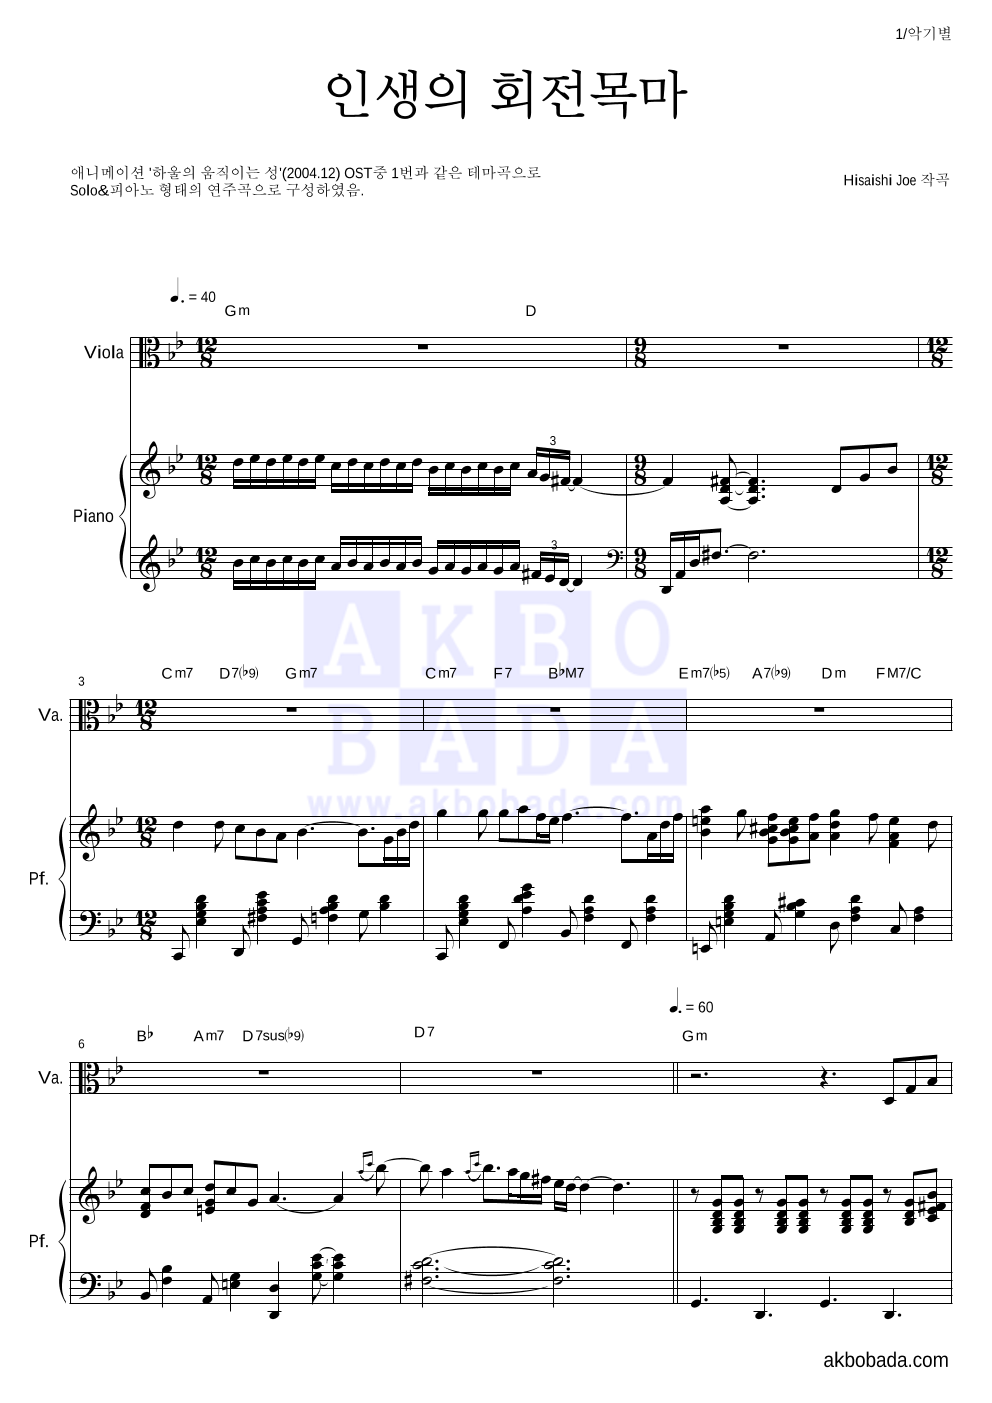 Hisaishi Joe - 인생의 회전목마 비올라&피아노 악보 